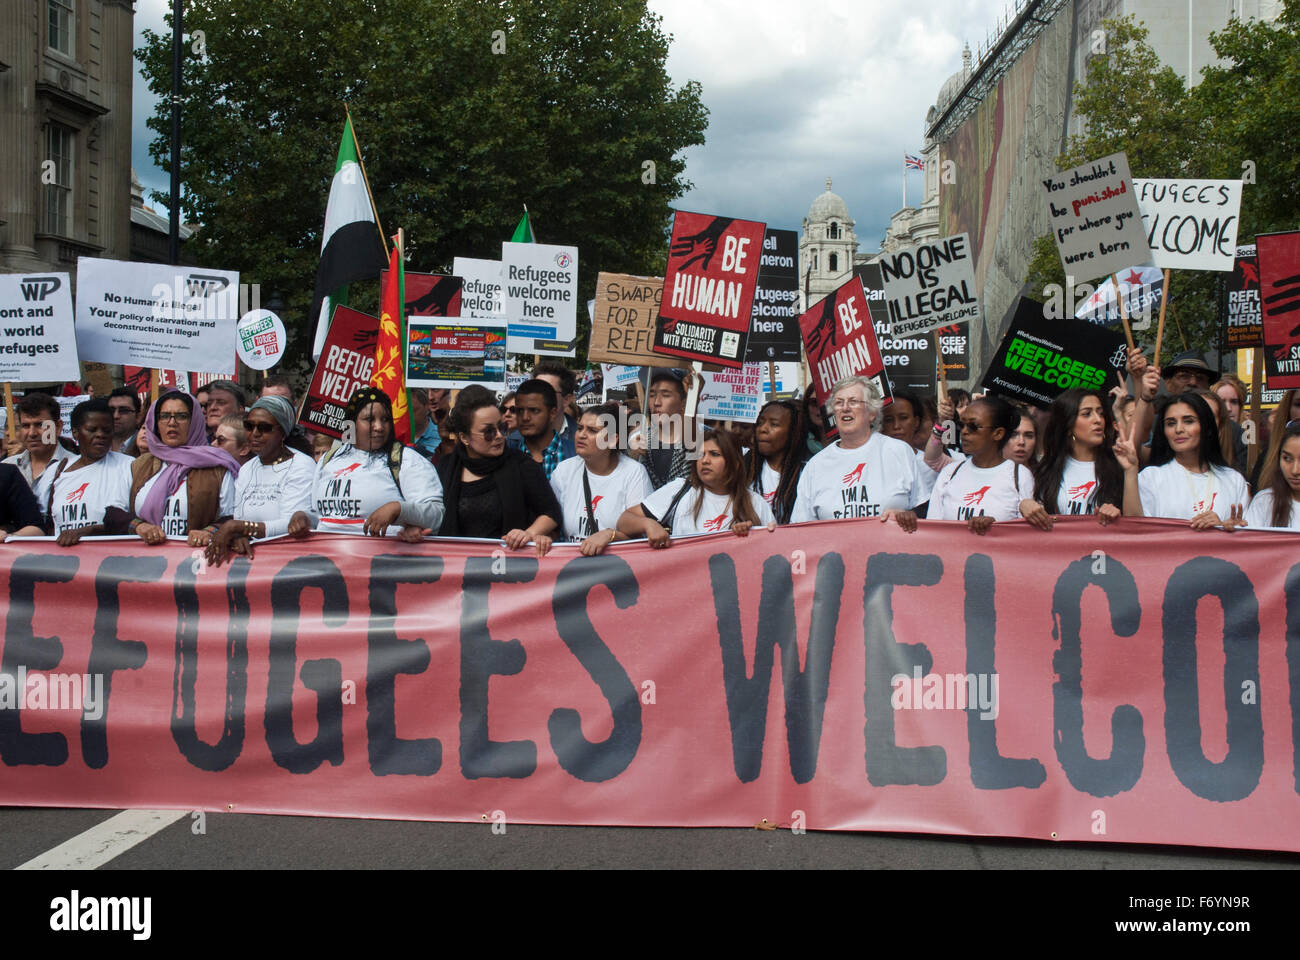 "Flüchtlinge willkommen hier" Demonstration. Plakat / banner "Flüchtlinge sind willkommen hier" Stockfoto